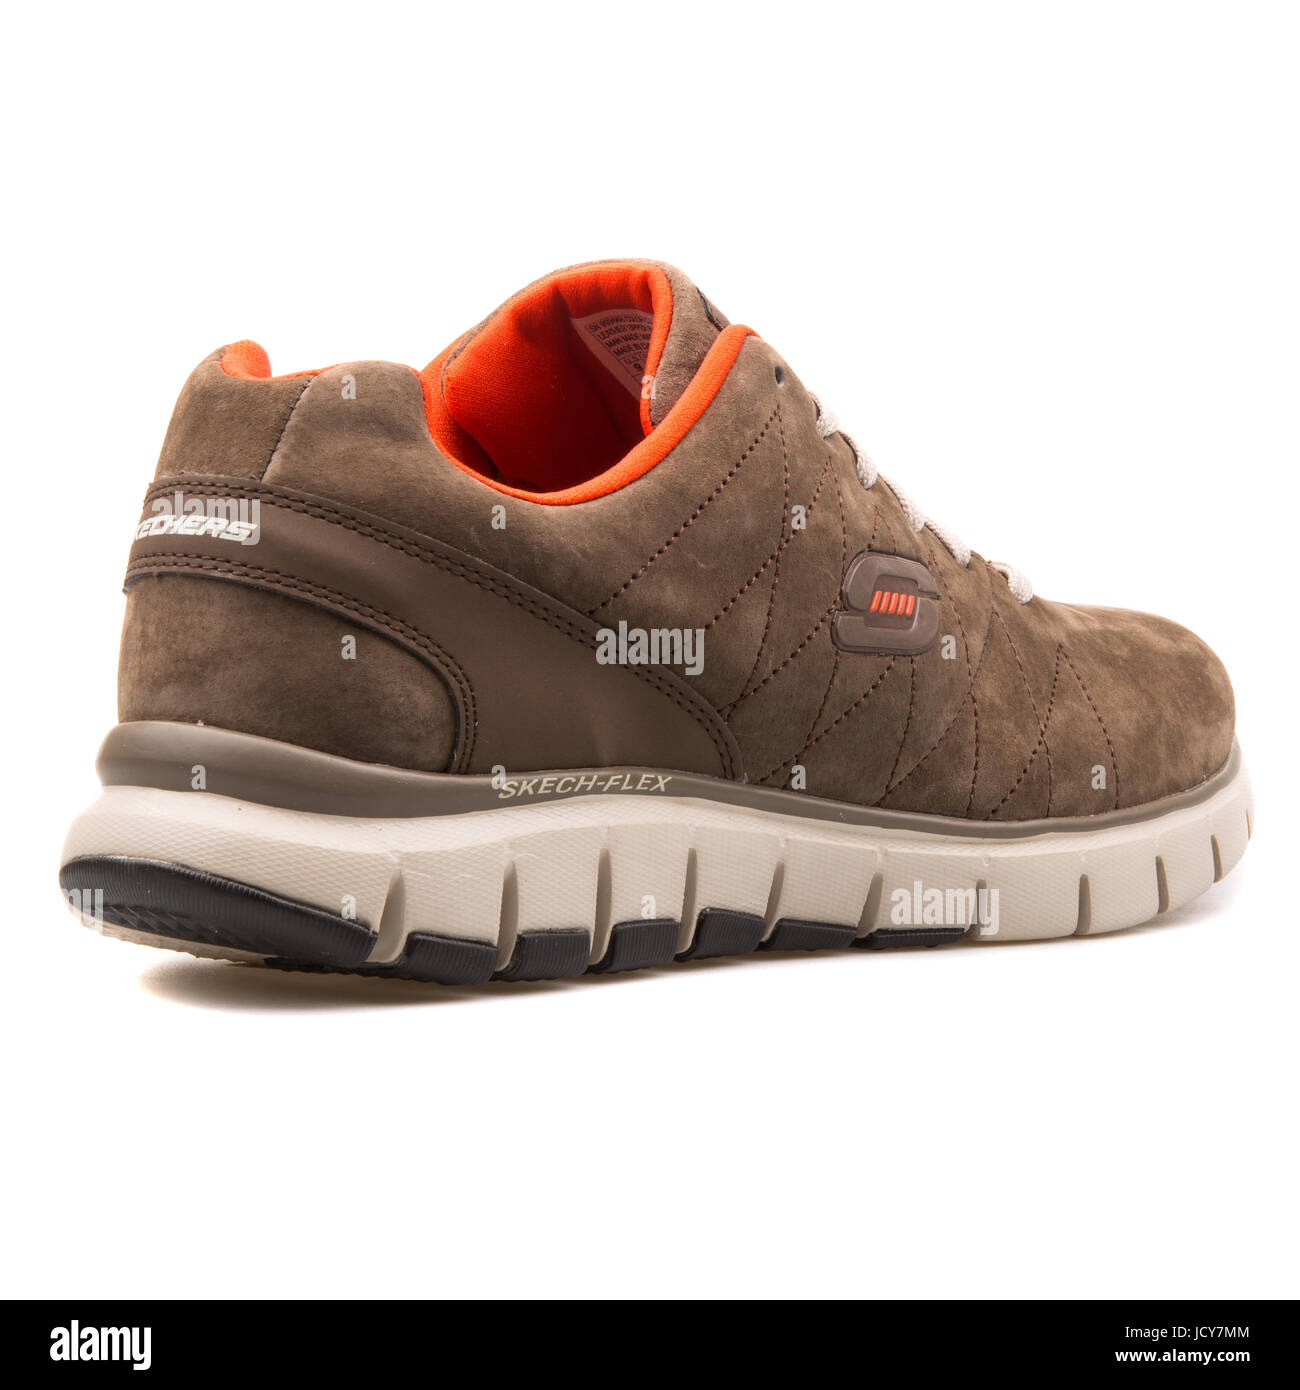 Skechers Skech-Flex Natural Brown and Orange Men's Running Shoes - Stock Photo - Alamy